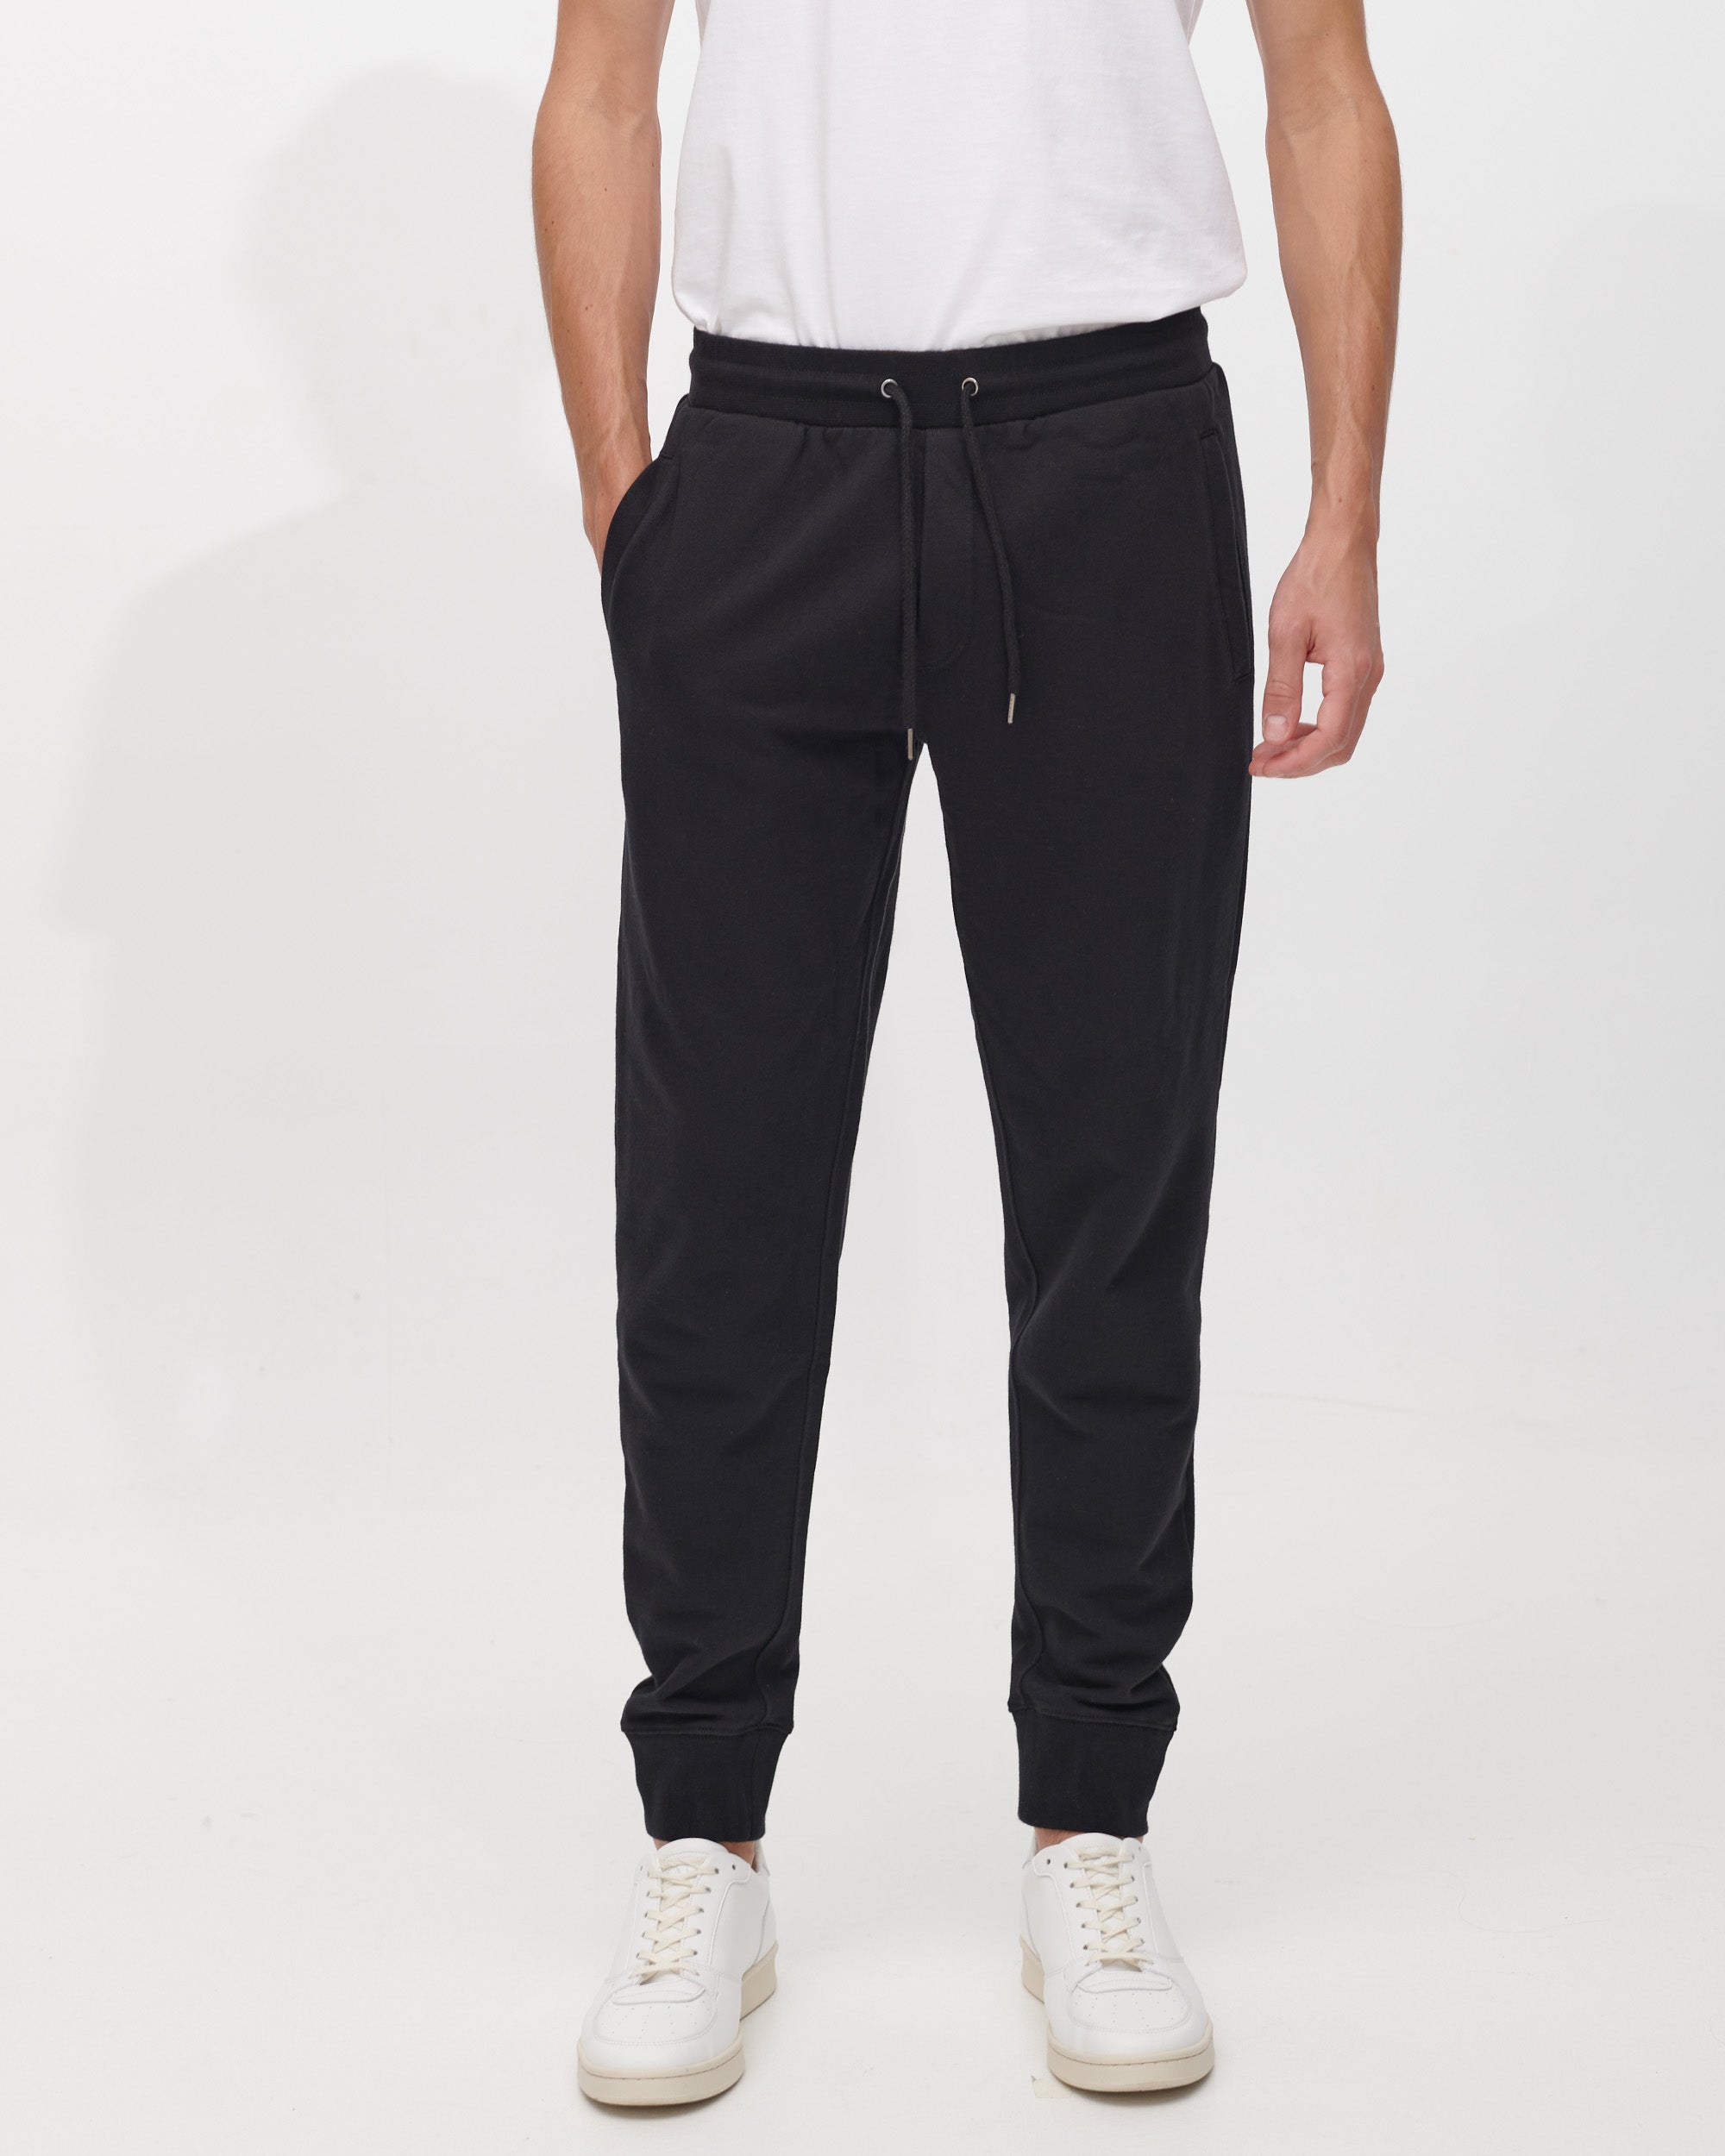 Perfect Black Sweatpants for Men | 400GSM Organic Cotton